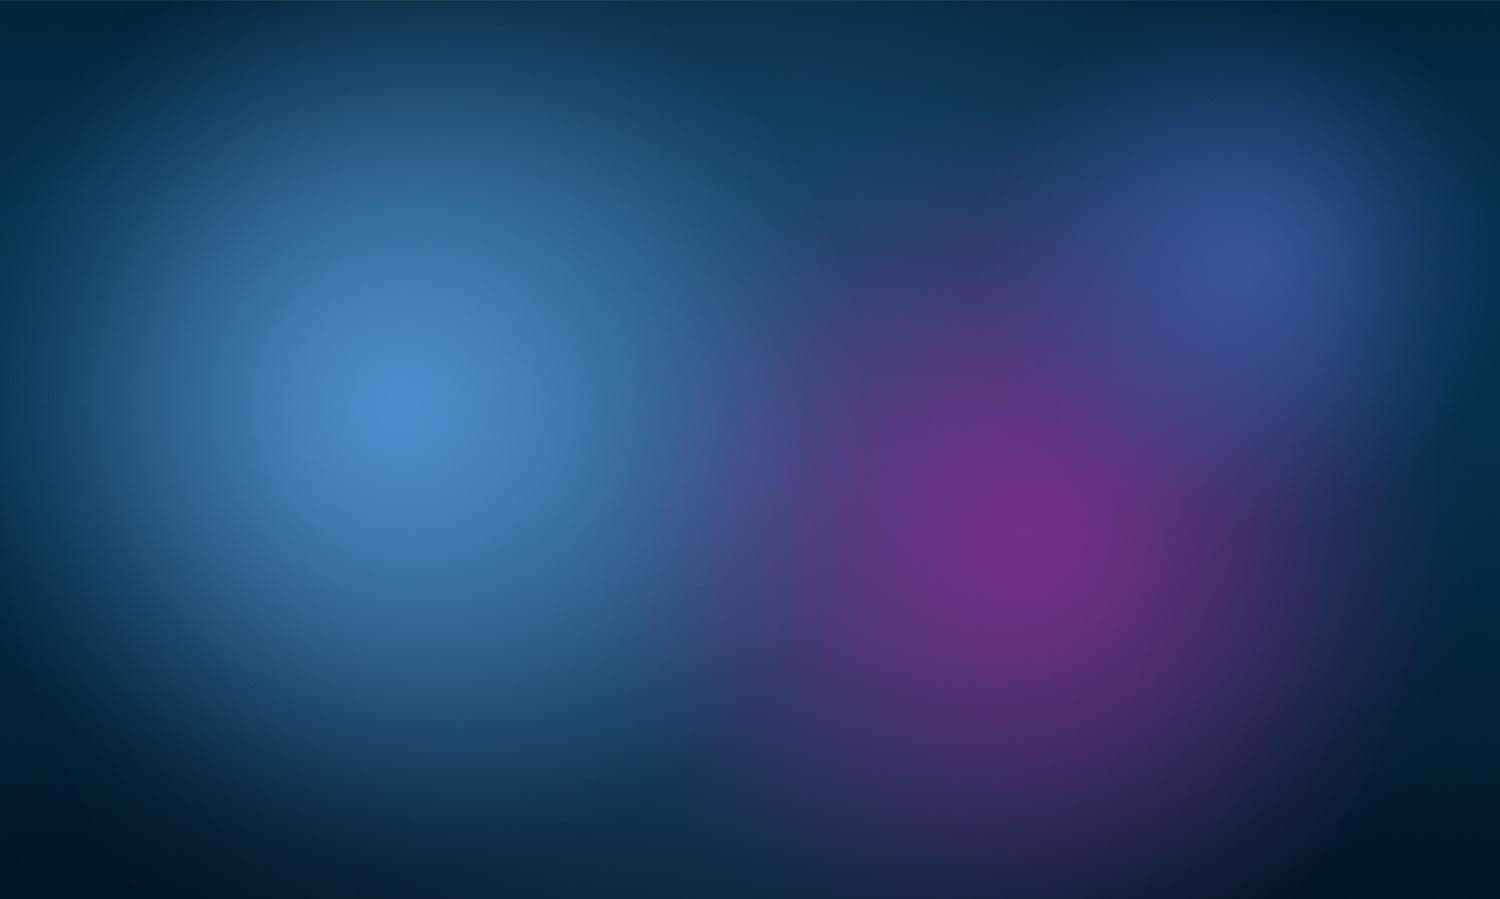 Blue plum texture background